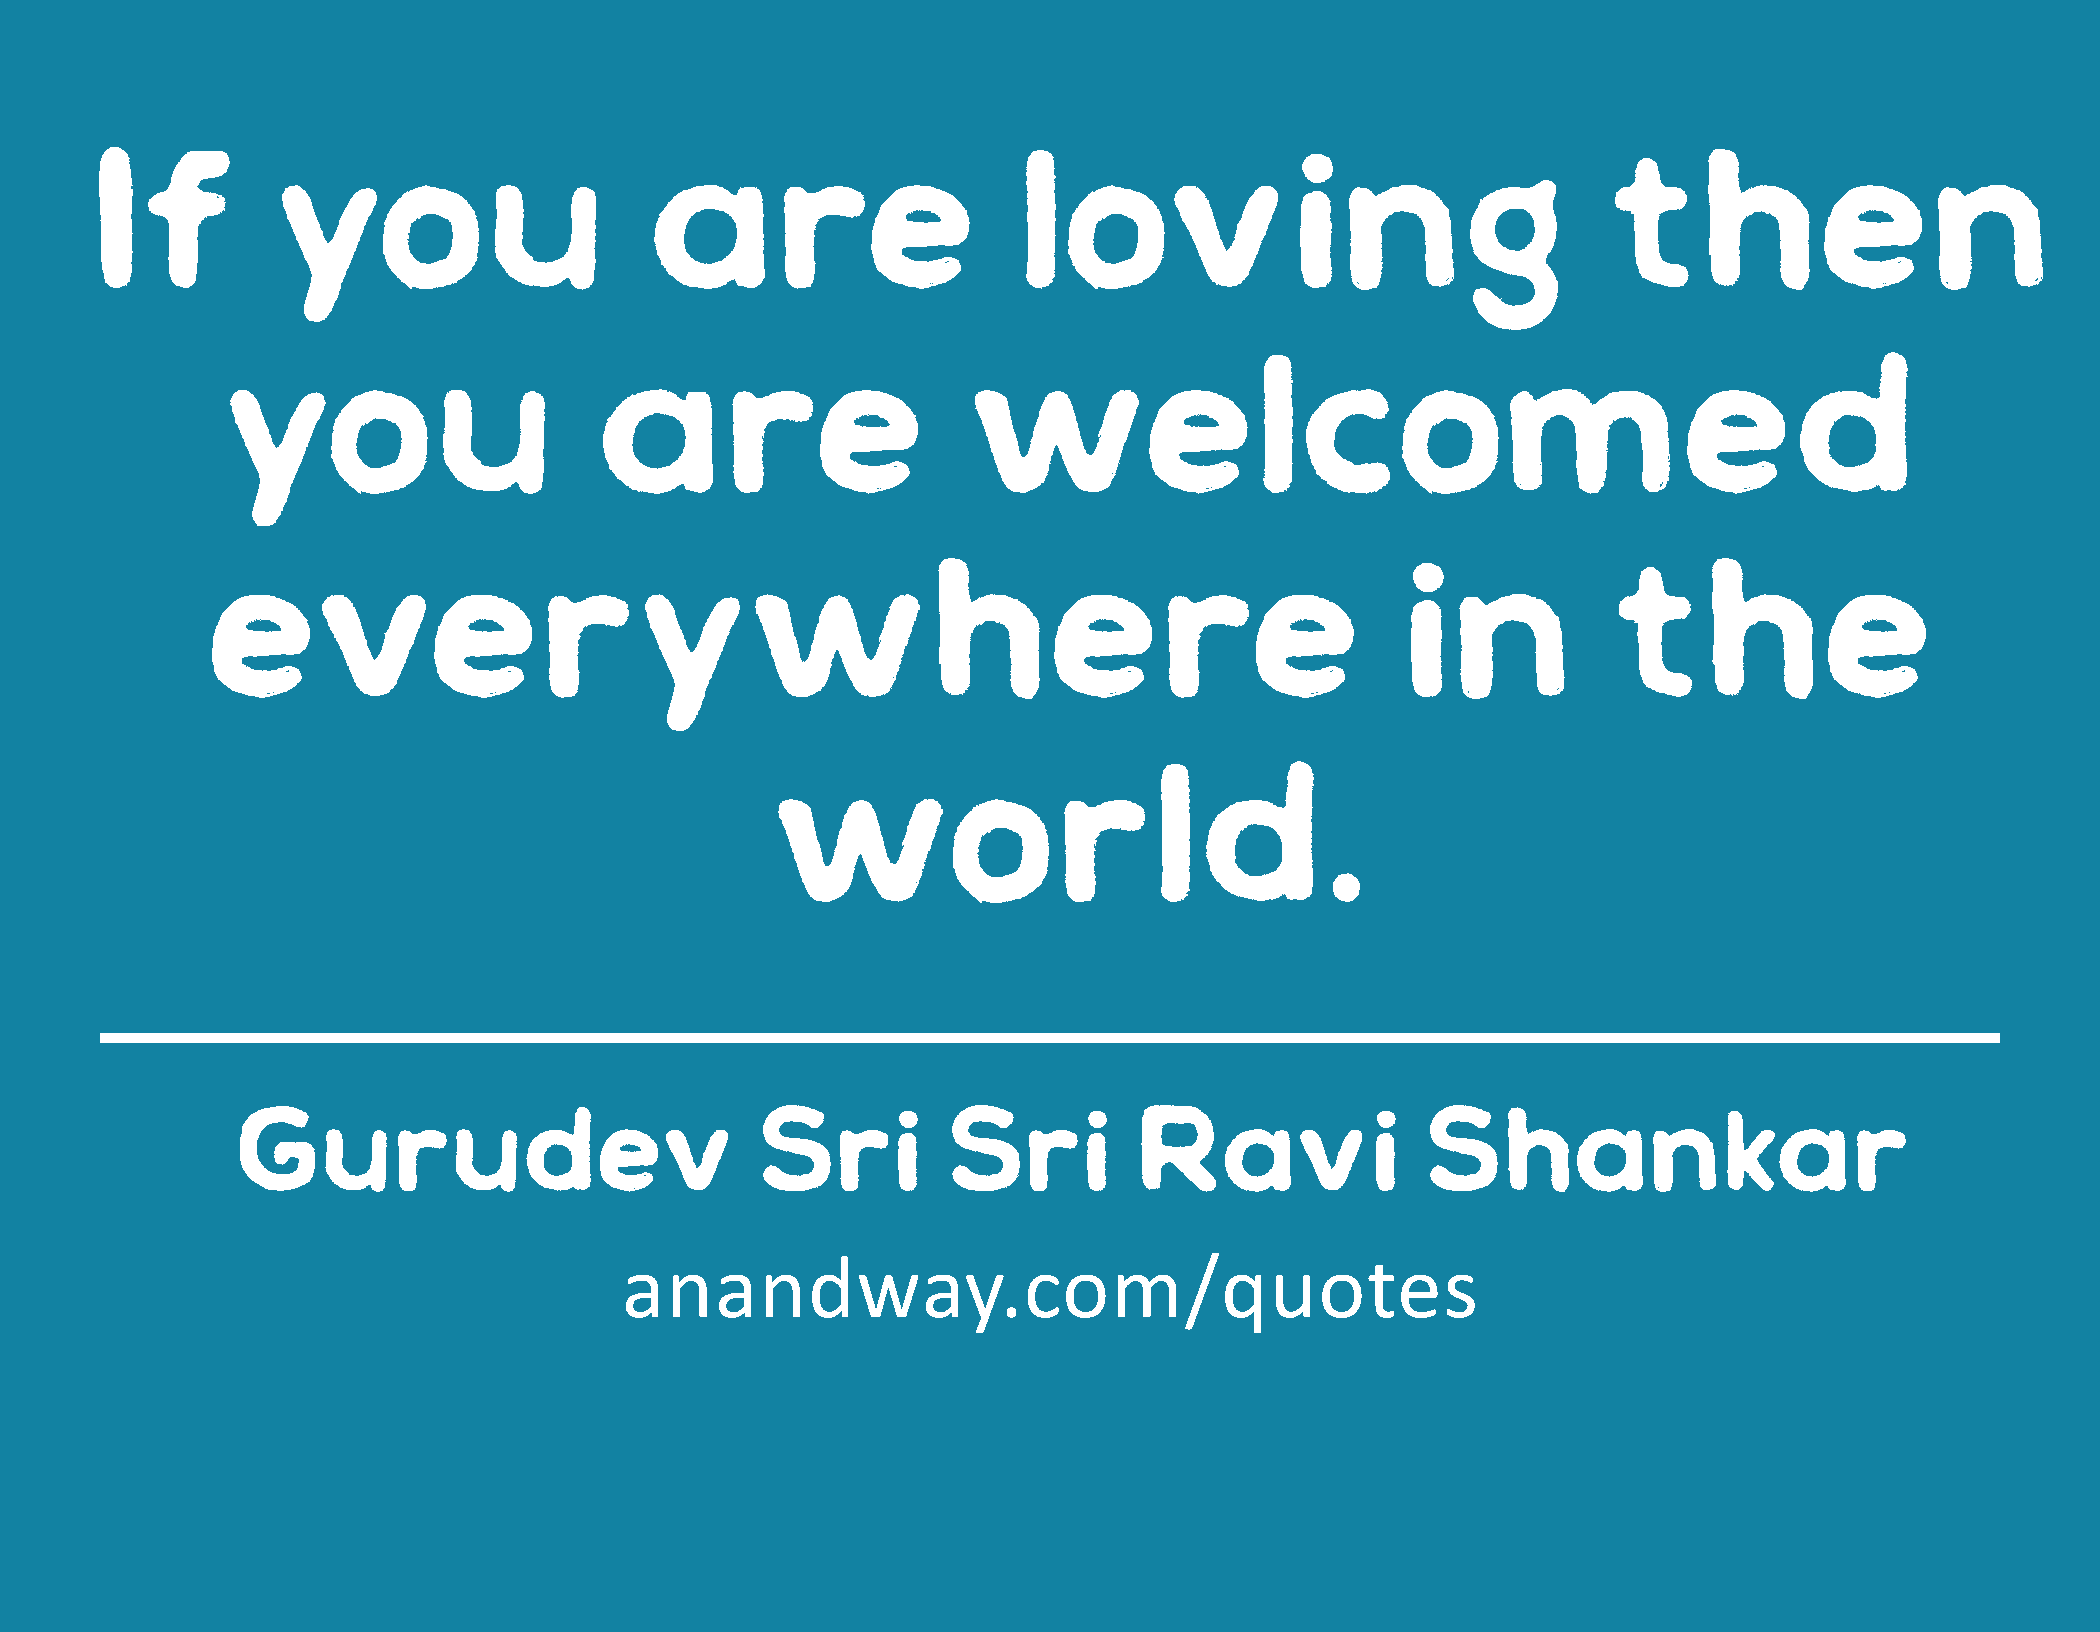 If you are loving then you are welcomed everywhere in the world. 
 -Gurudev Sri Sri Ravi Shankar